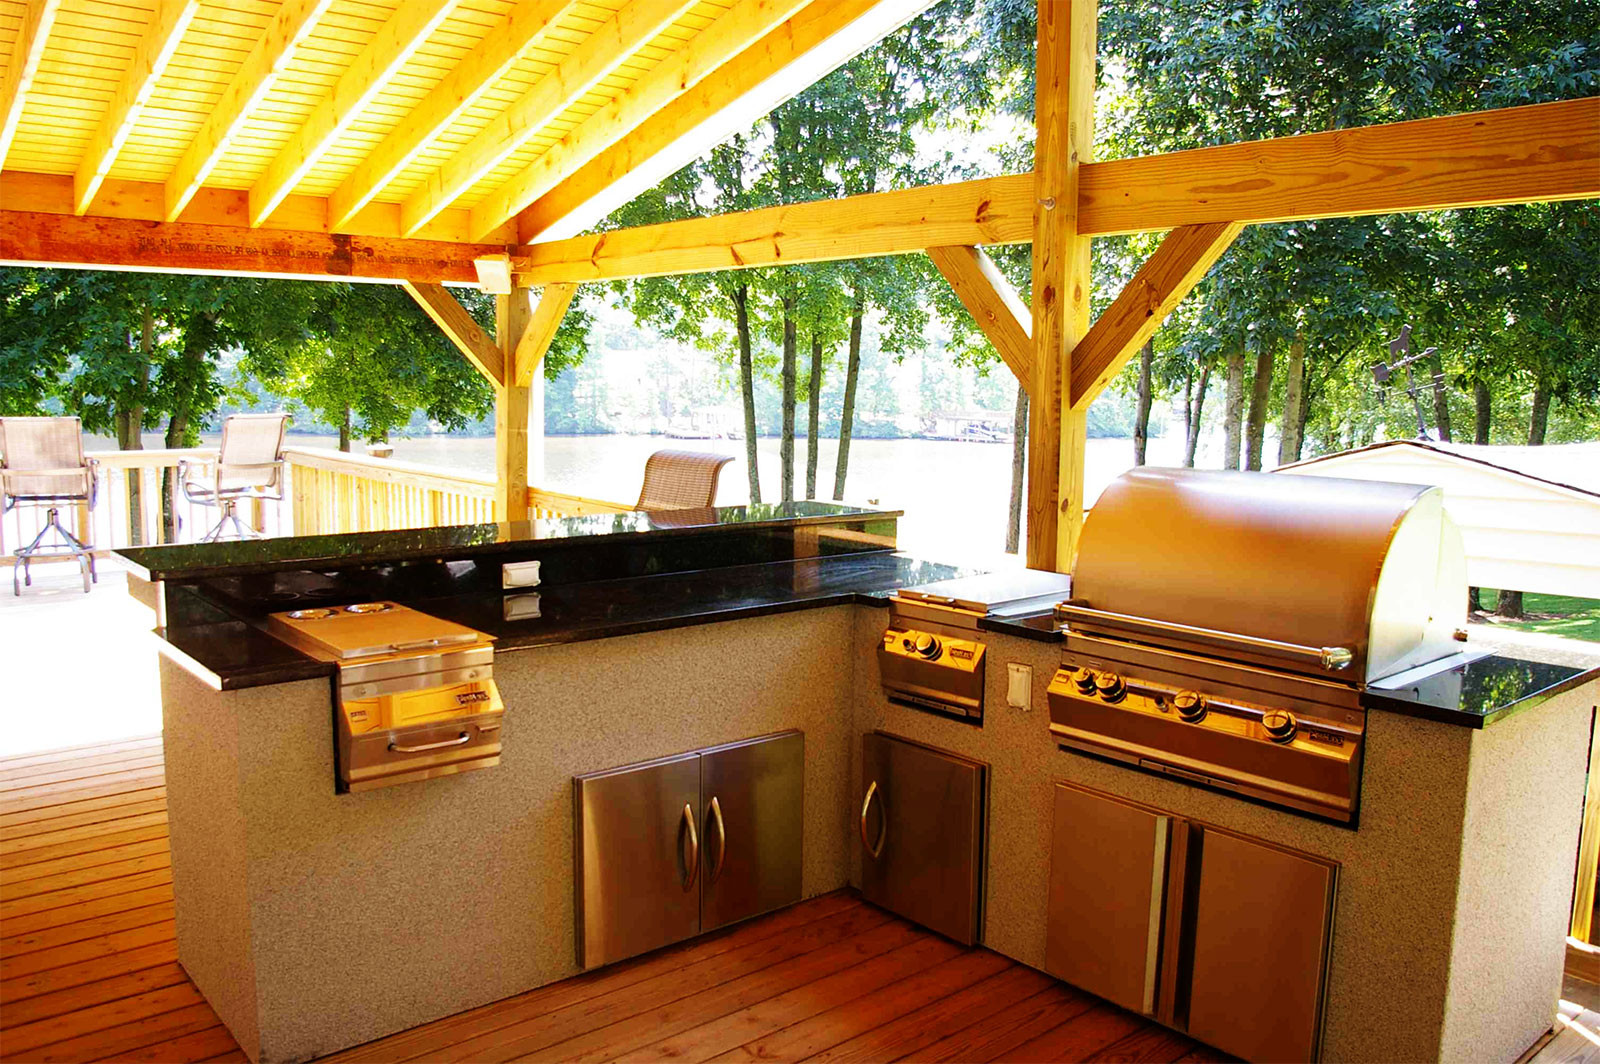 Inexpensive Outdoor Kitchen Ideas
 cheap outdoor kitchen design ideas Furniture Ideas